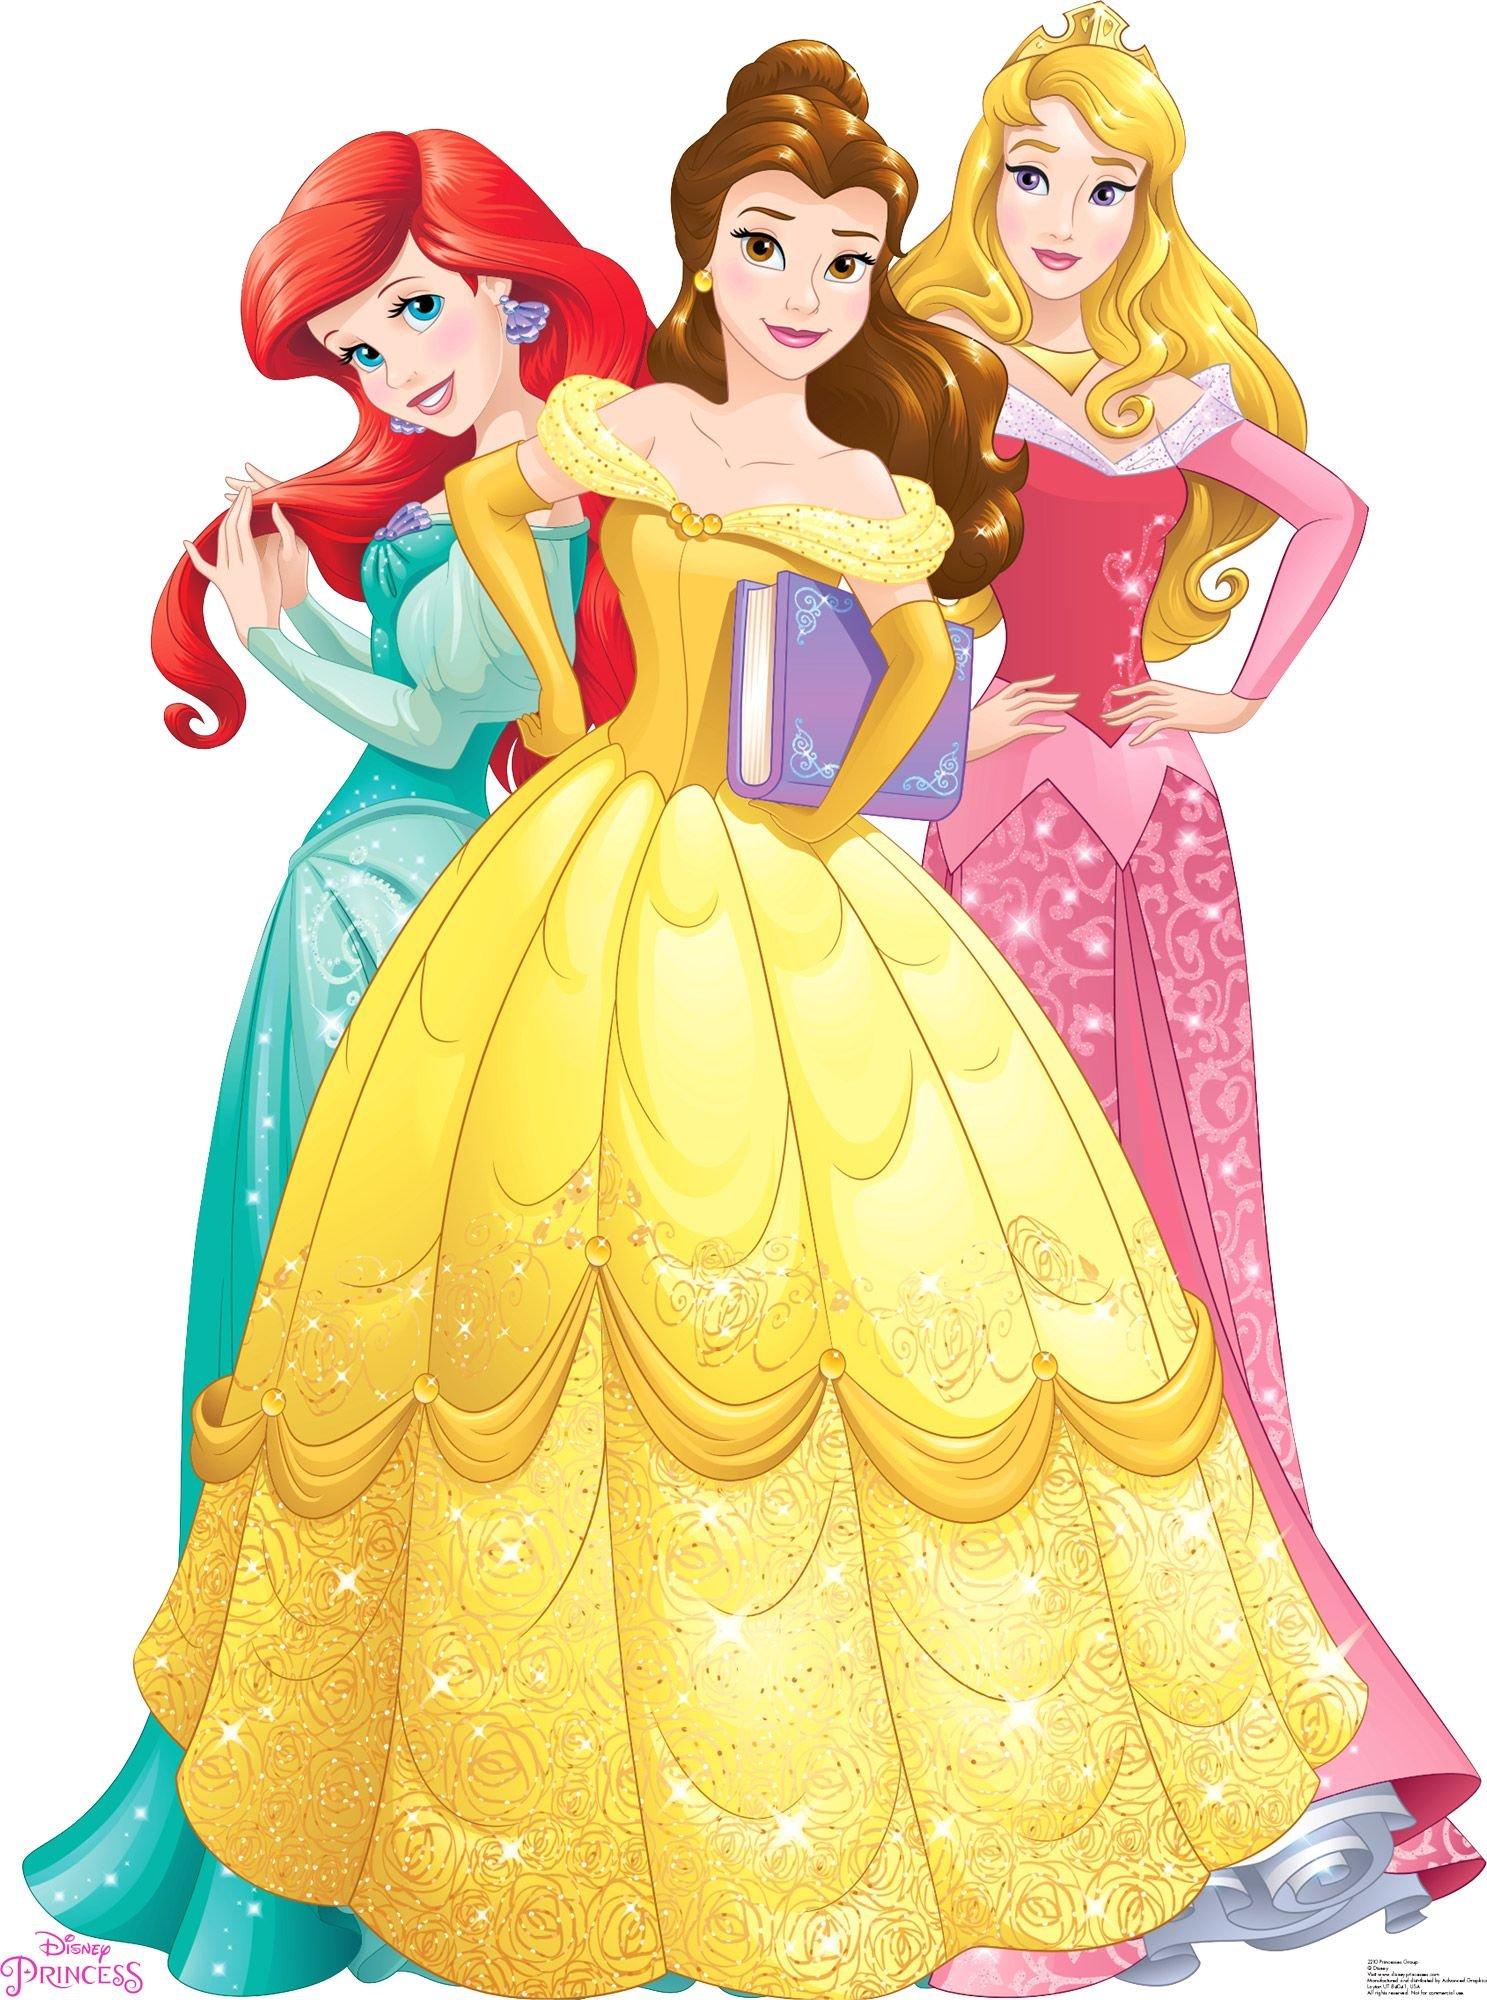 Feel Like Royalty with NEW Disney Princess Plush! 